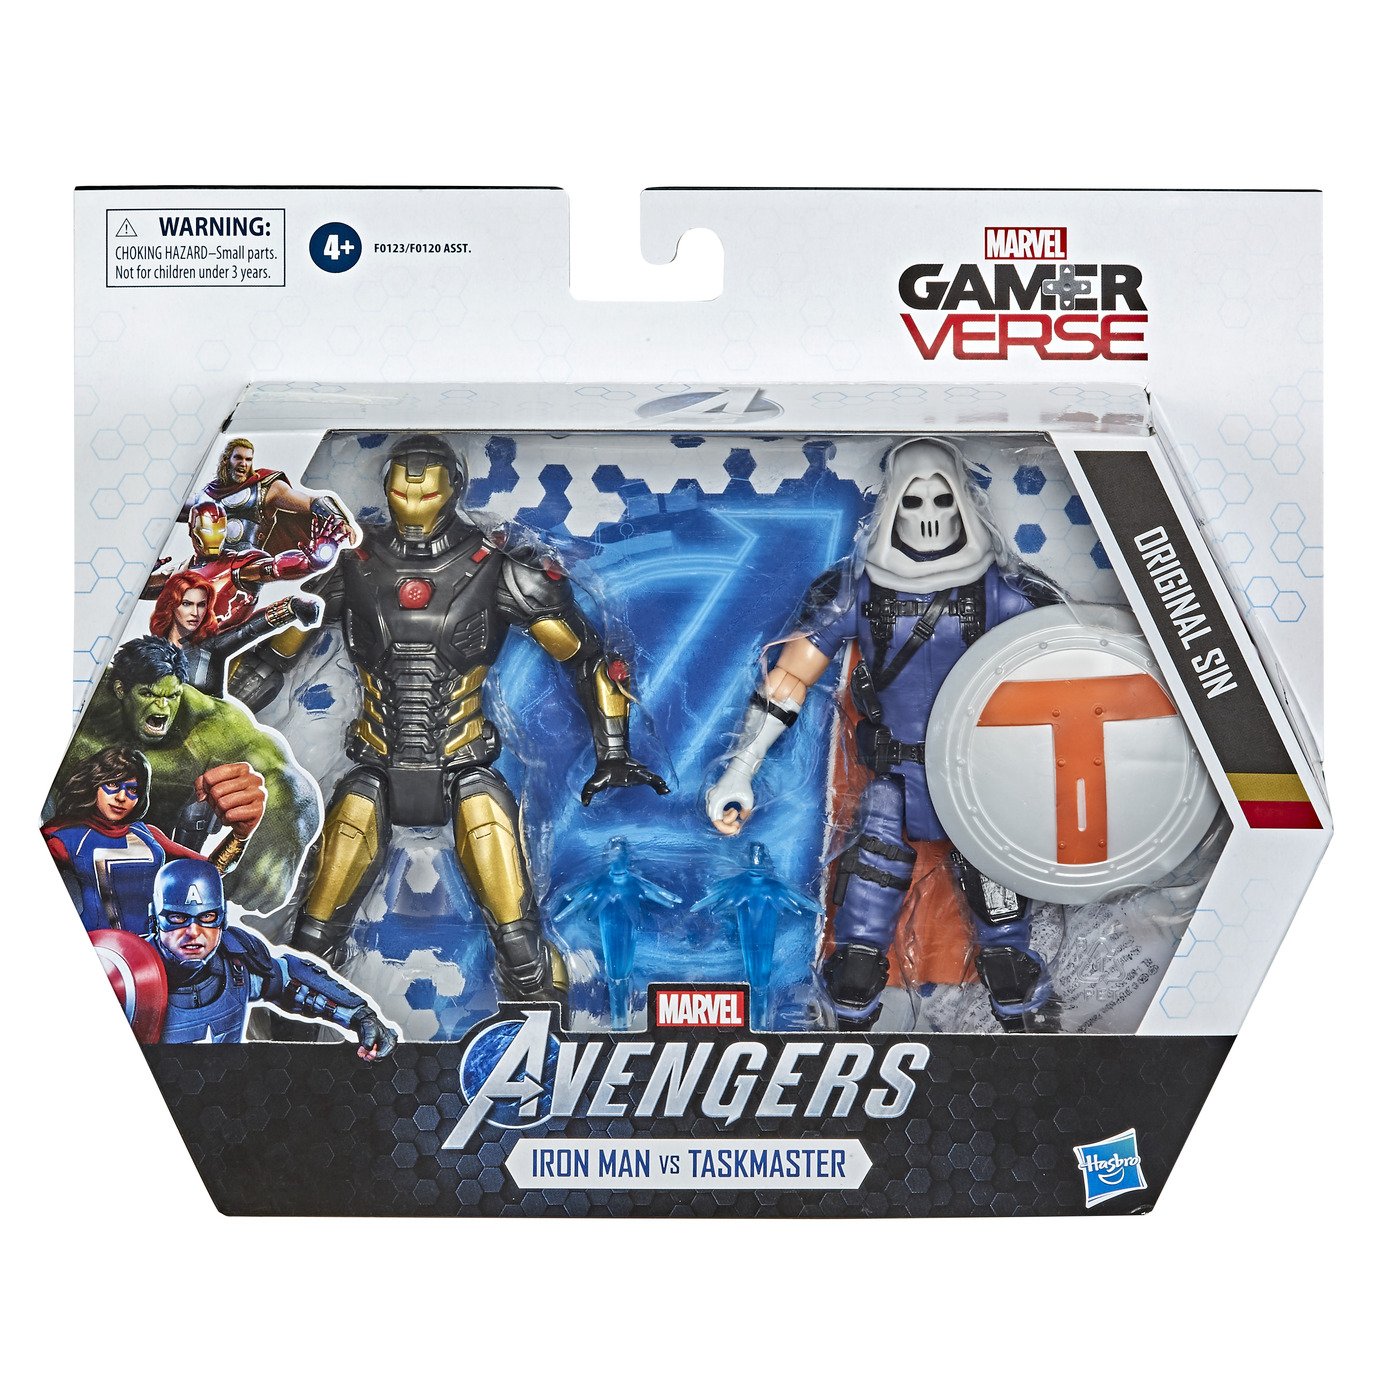 Hasbro Marvel Gamerverse 15cm Iron Man vs Taskmaster Figures Review